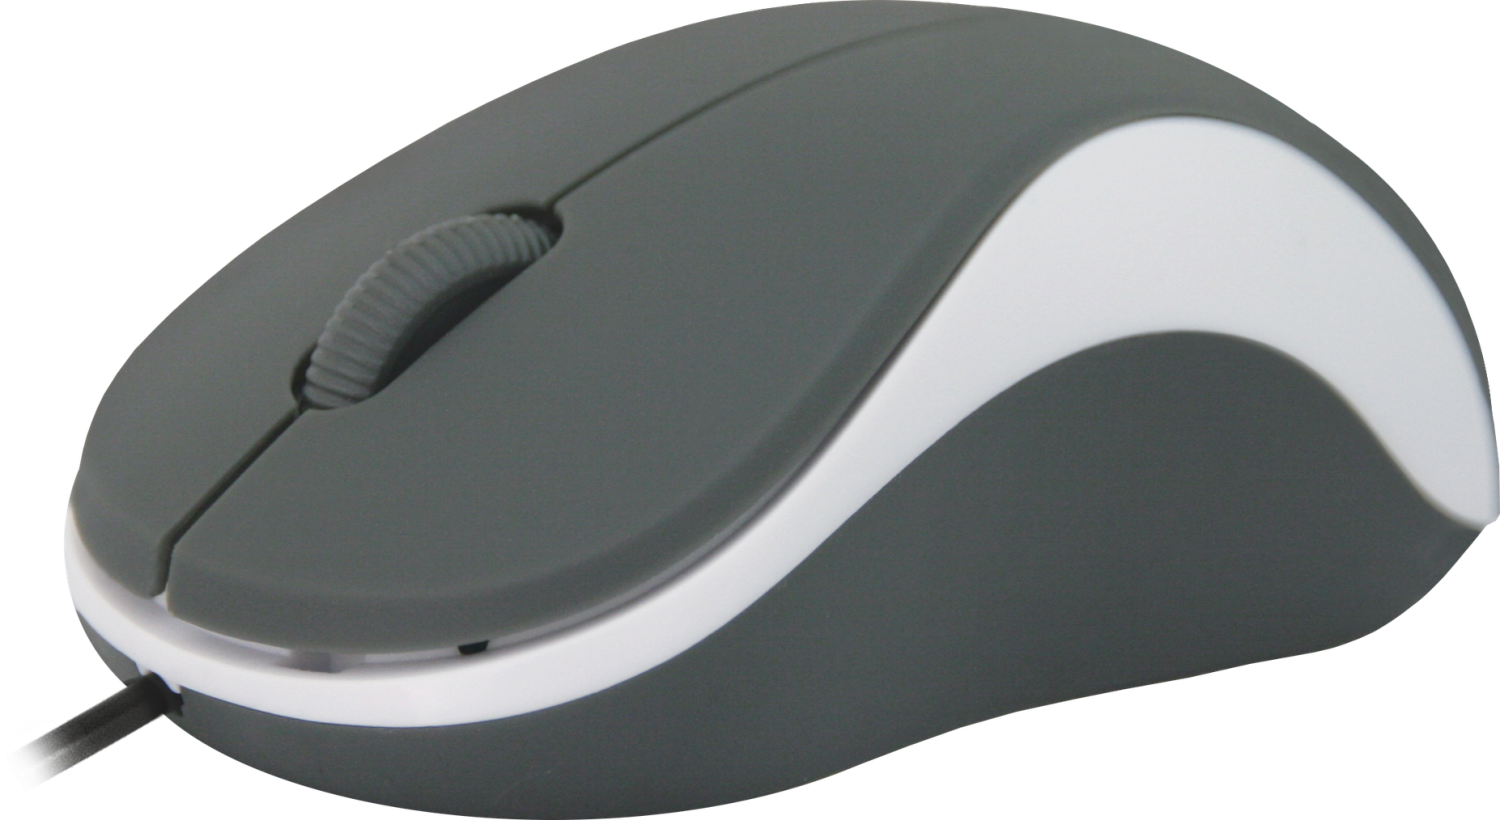 Мышь Defender  Accura MS-970 серый+белый, 3 кнопки